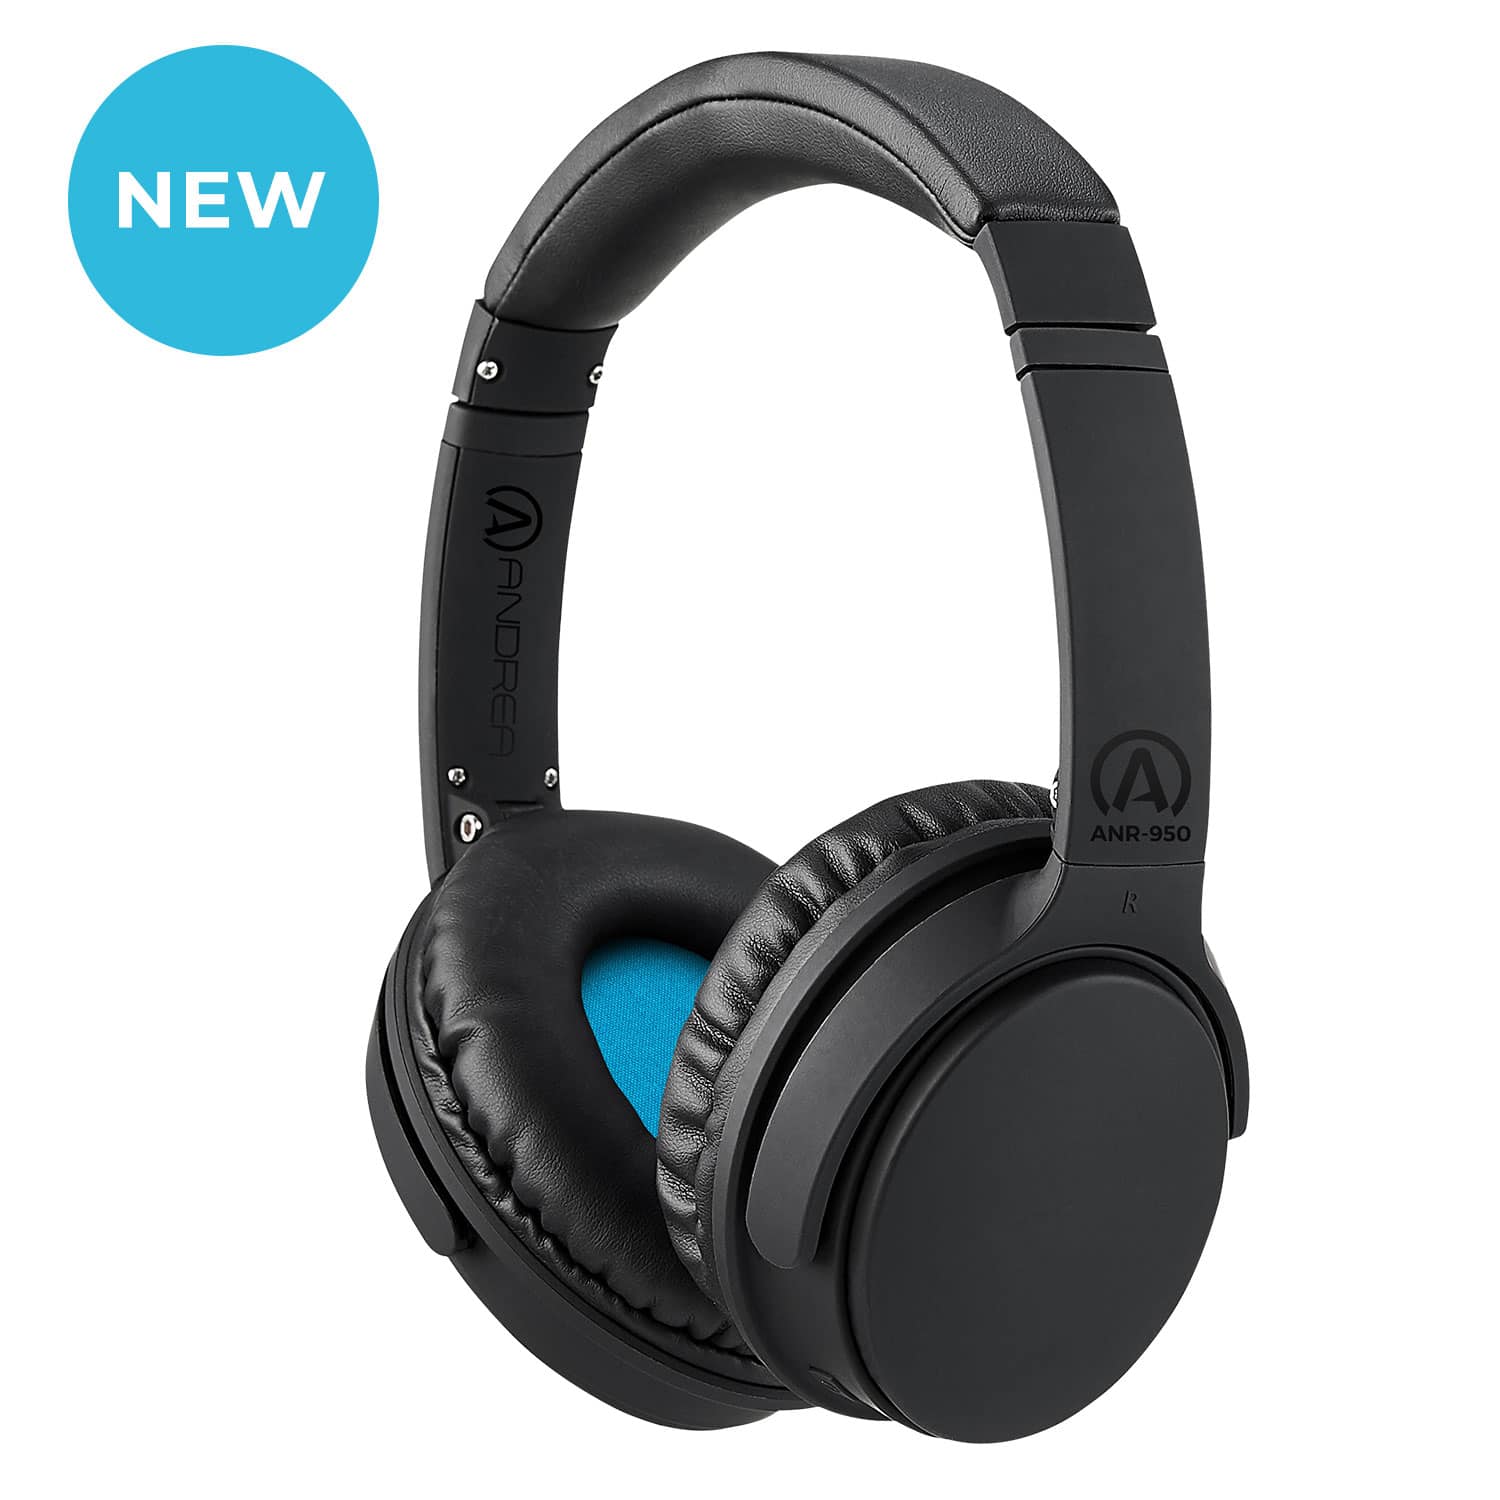 ANR-950 Wireless Bluetooth Headphones